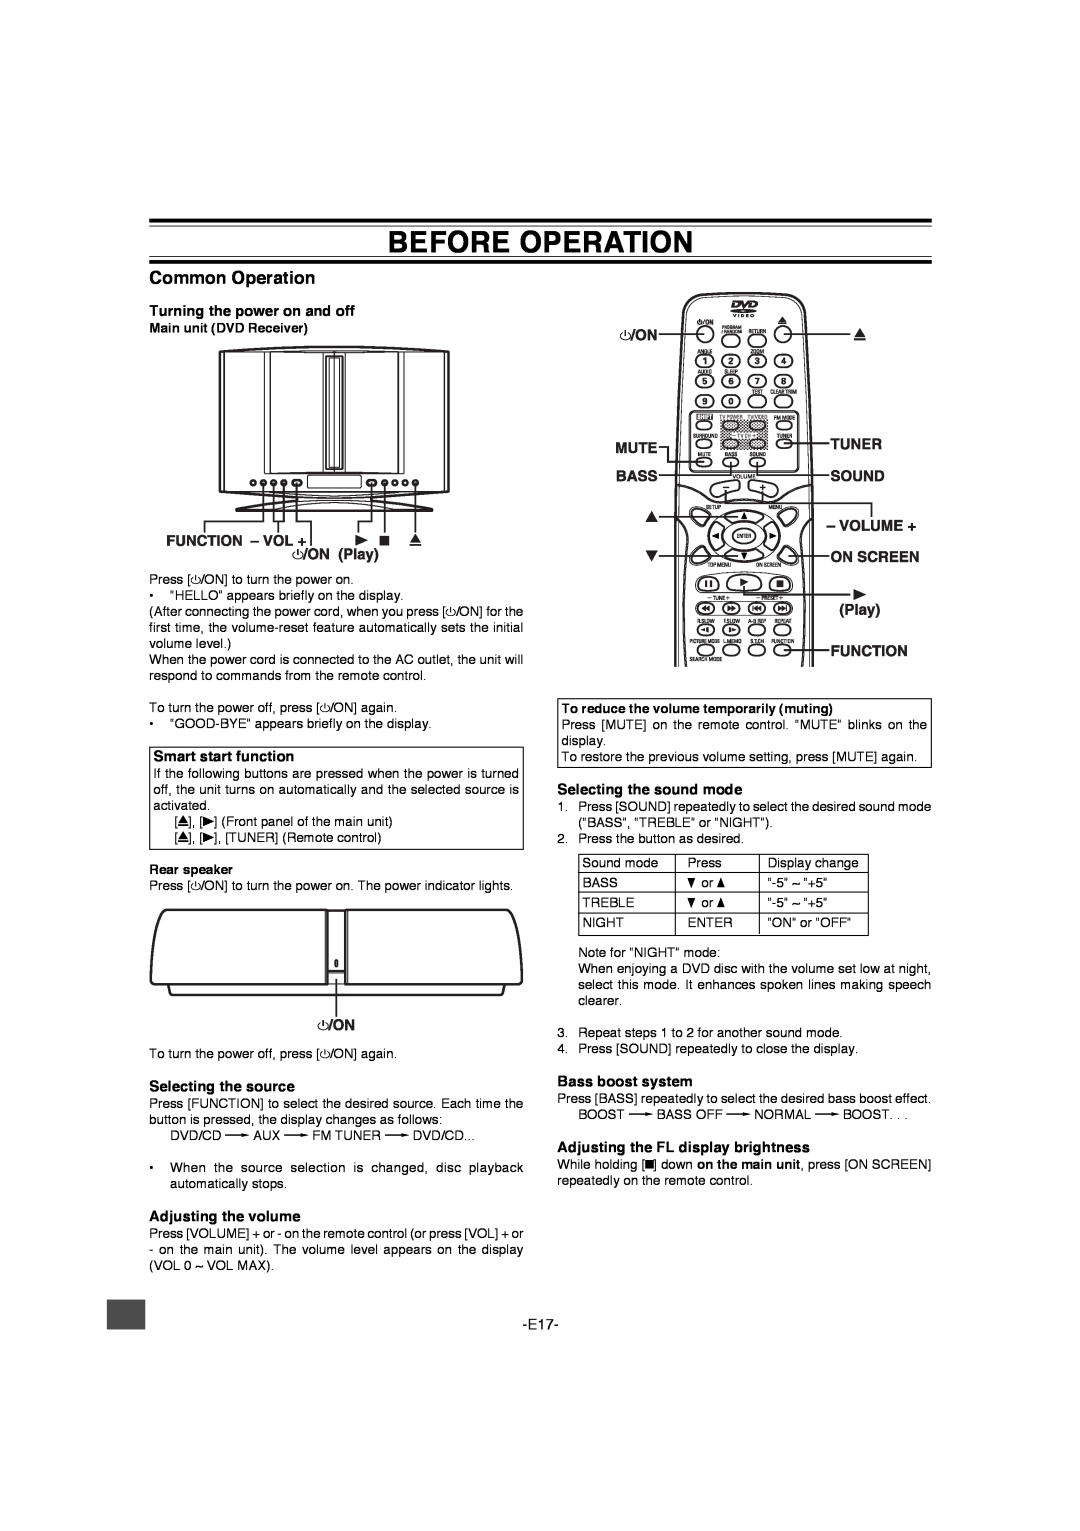 Sanyo DWM-4500 instruction manual Before Operation, Common Operation, Main unit DVD Receiver, Rear speaker 